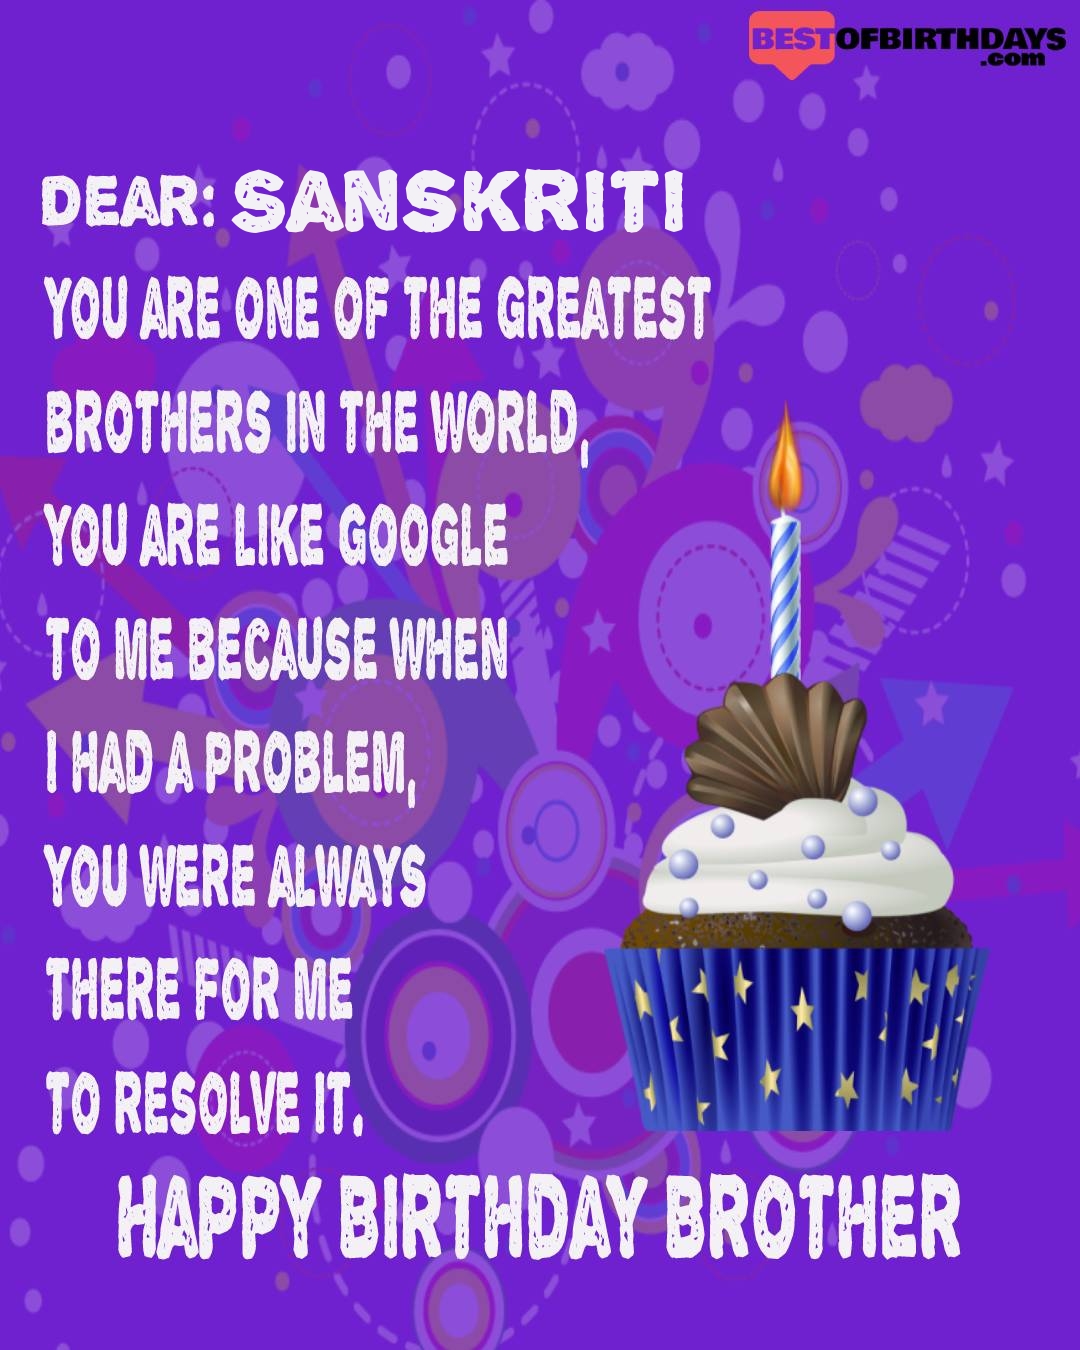 Happy birthday sanskriti bhai brother bro